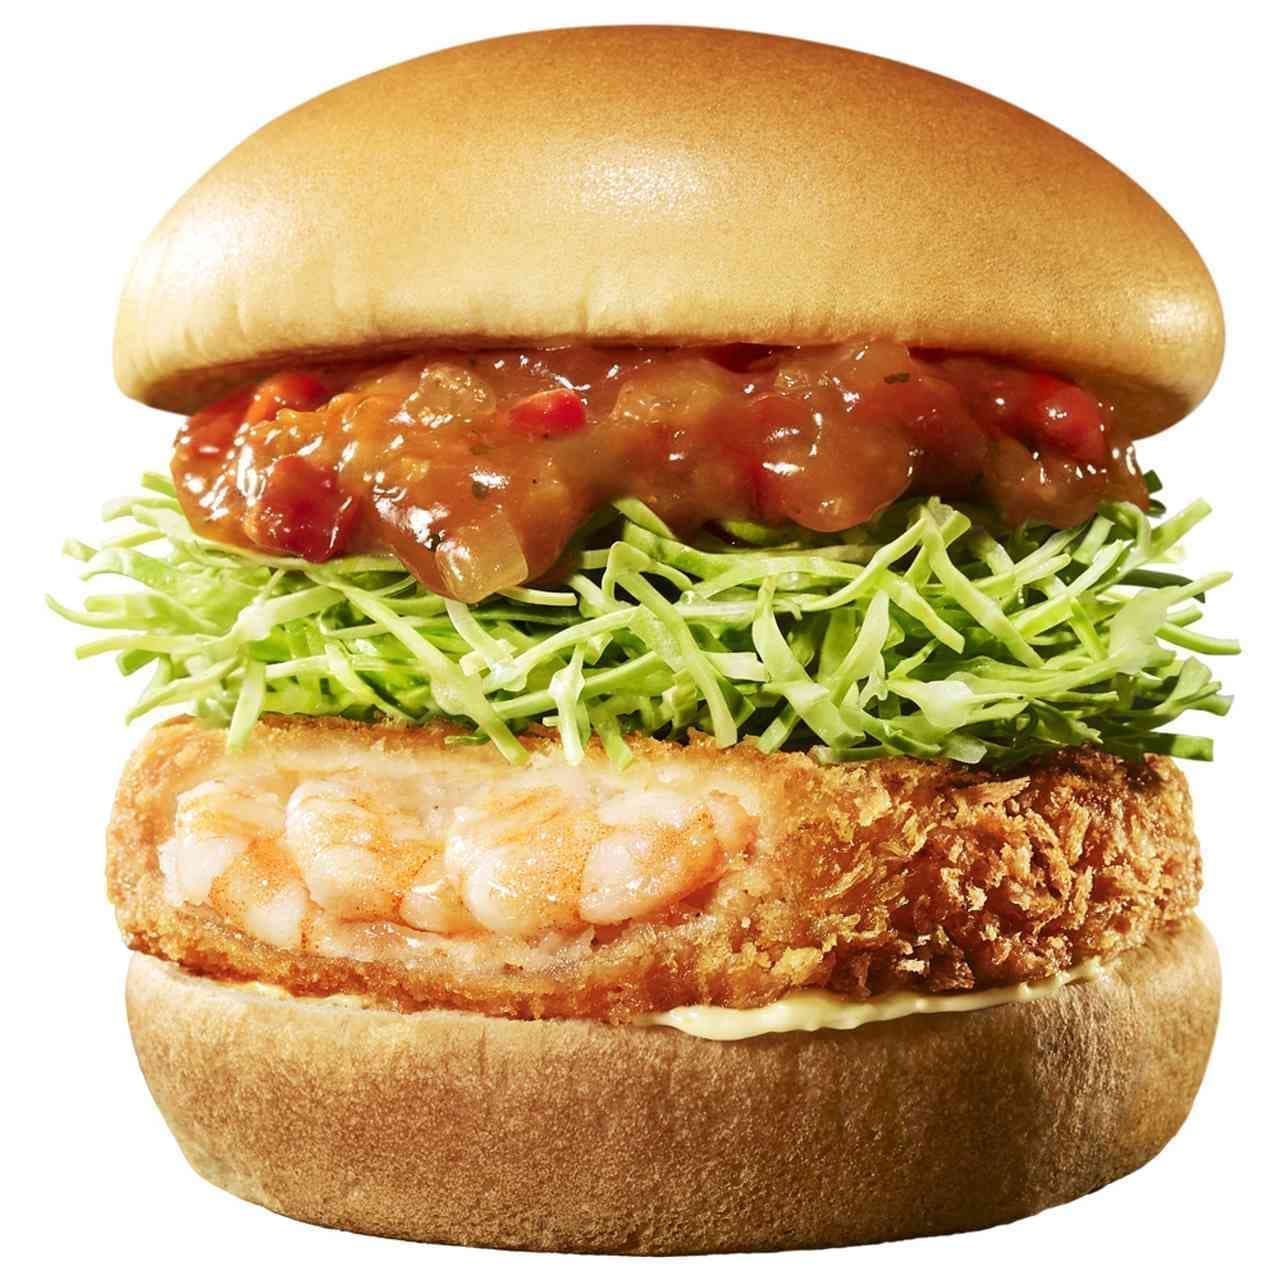 Ebi Katsu Burger (Shrimp Cutlet Burger) 海老カツバーガー • Just